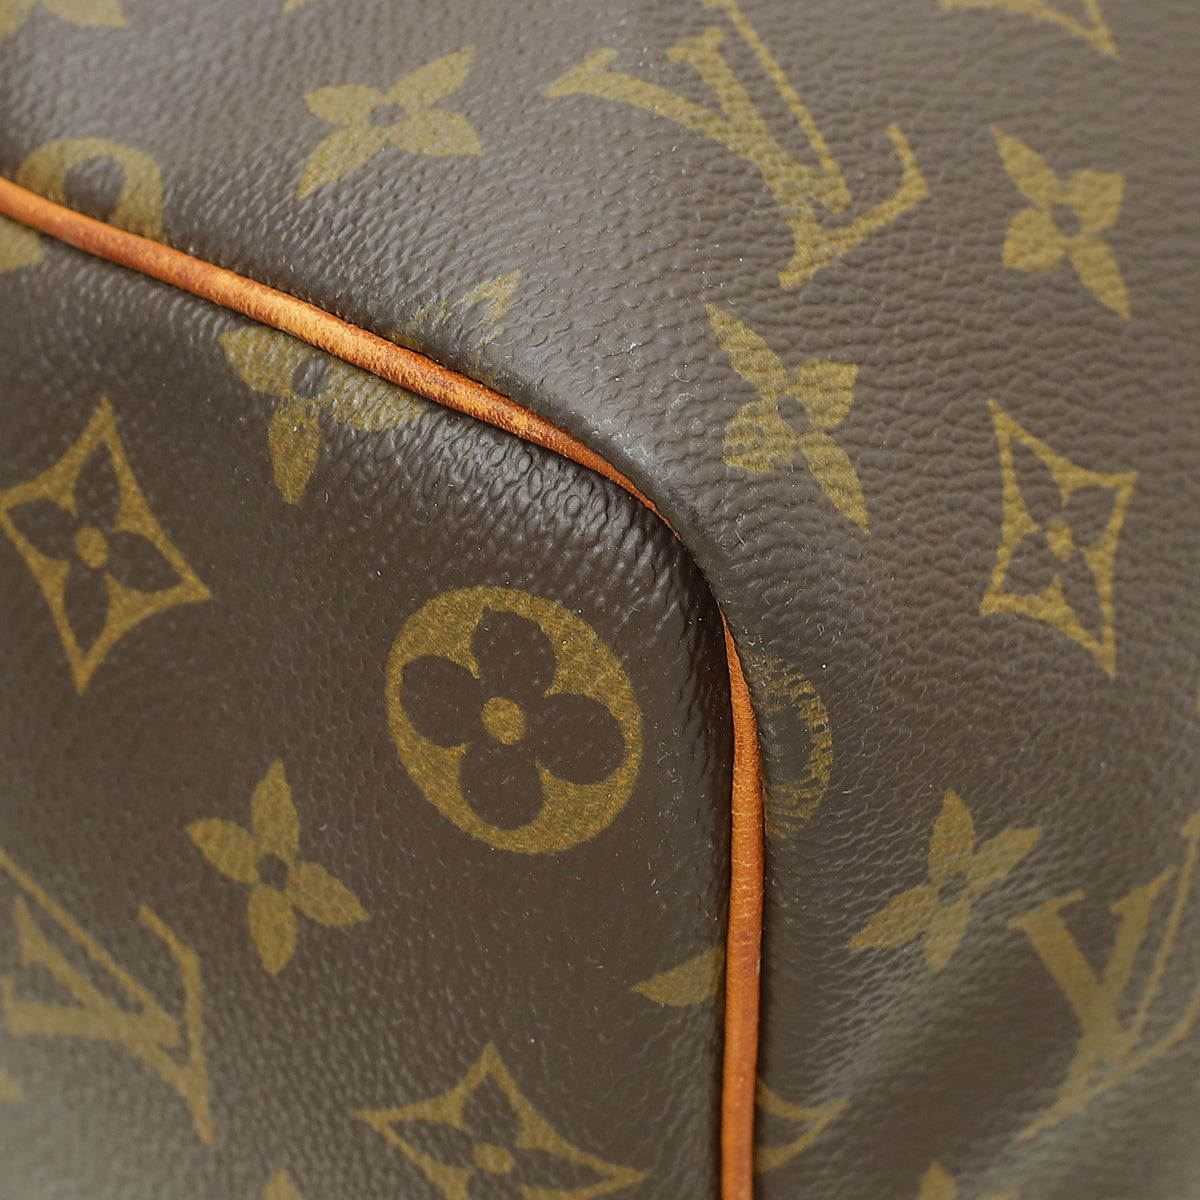 Louis Vuitton Brown Monogram Keepall 45 Bag